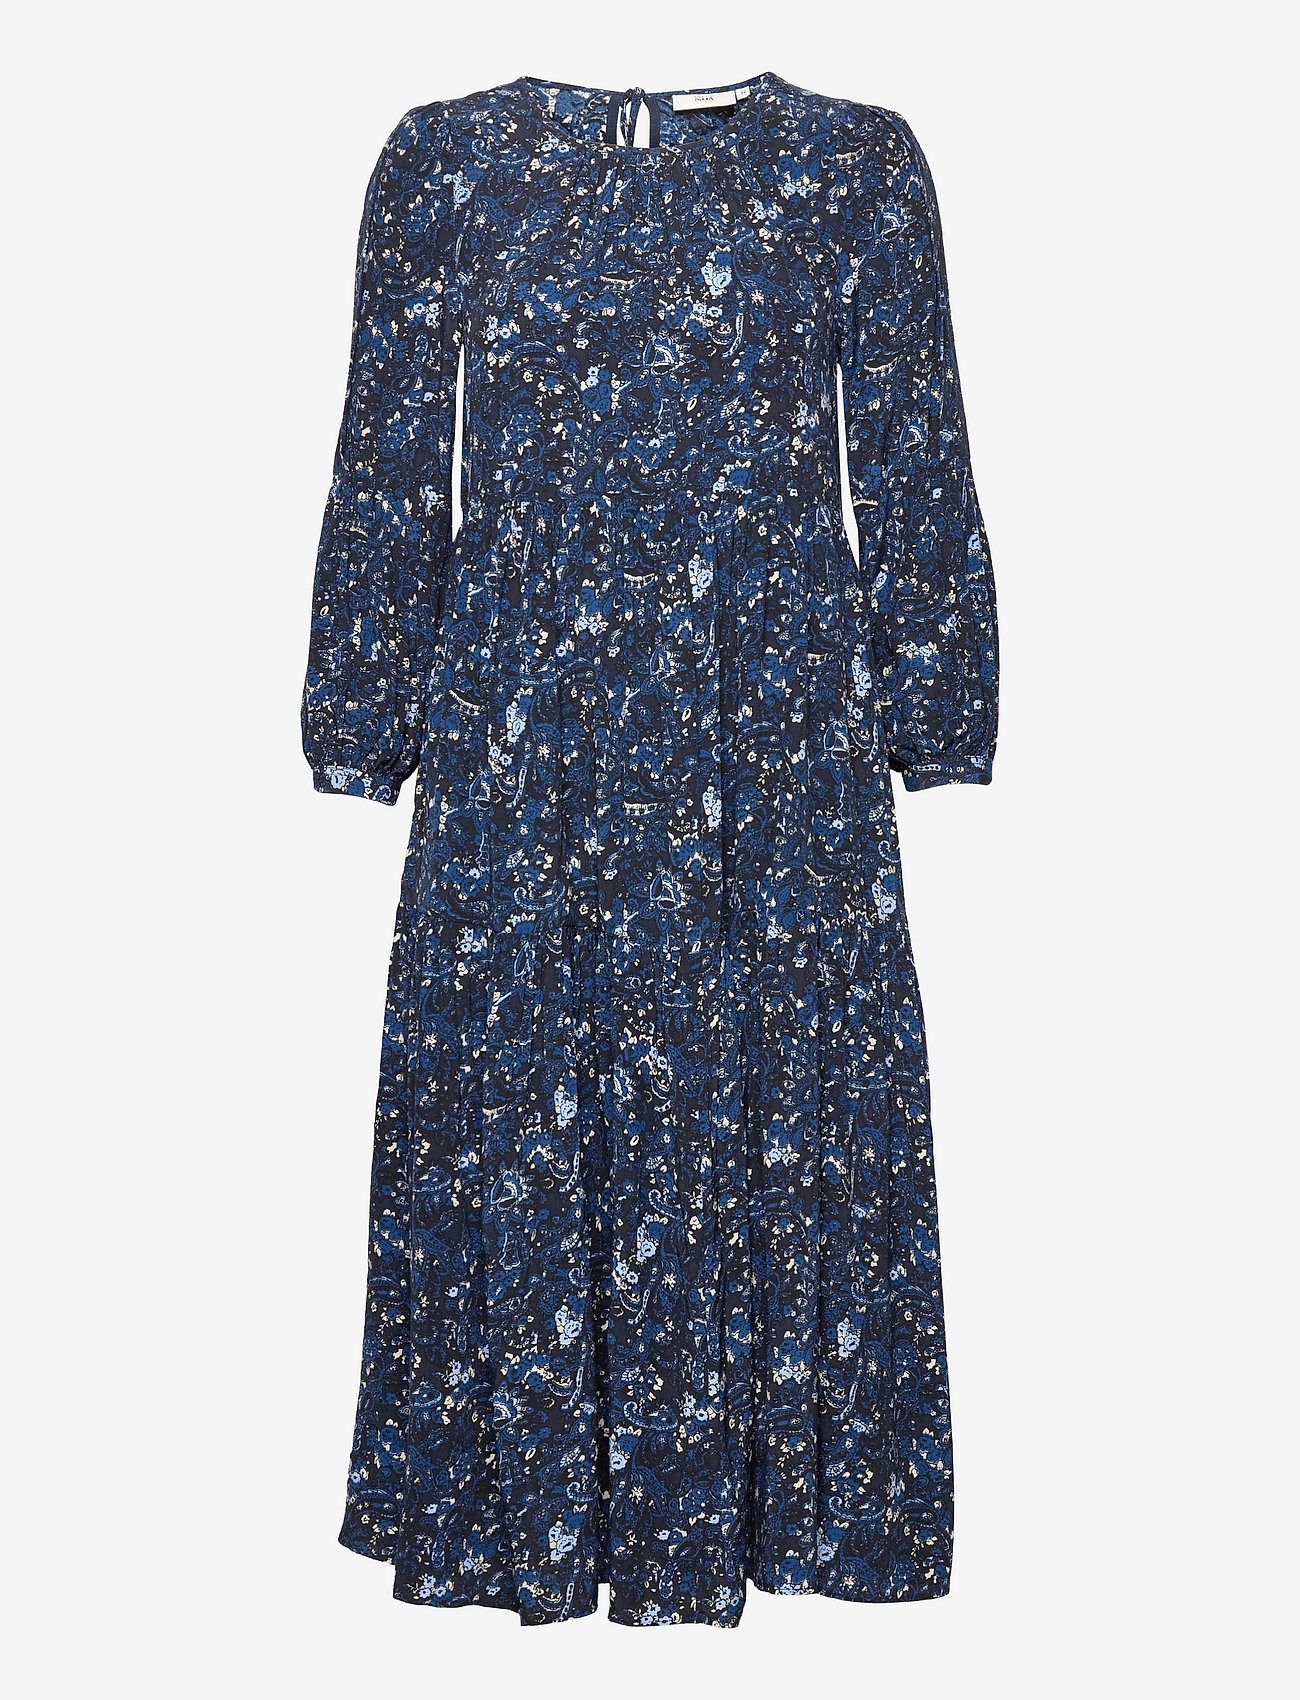 Noa Noa - Dress long sleeve - midiklänningar - print blue - 0